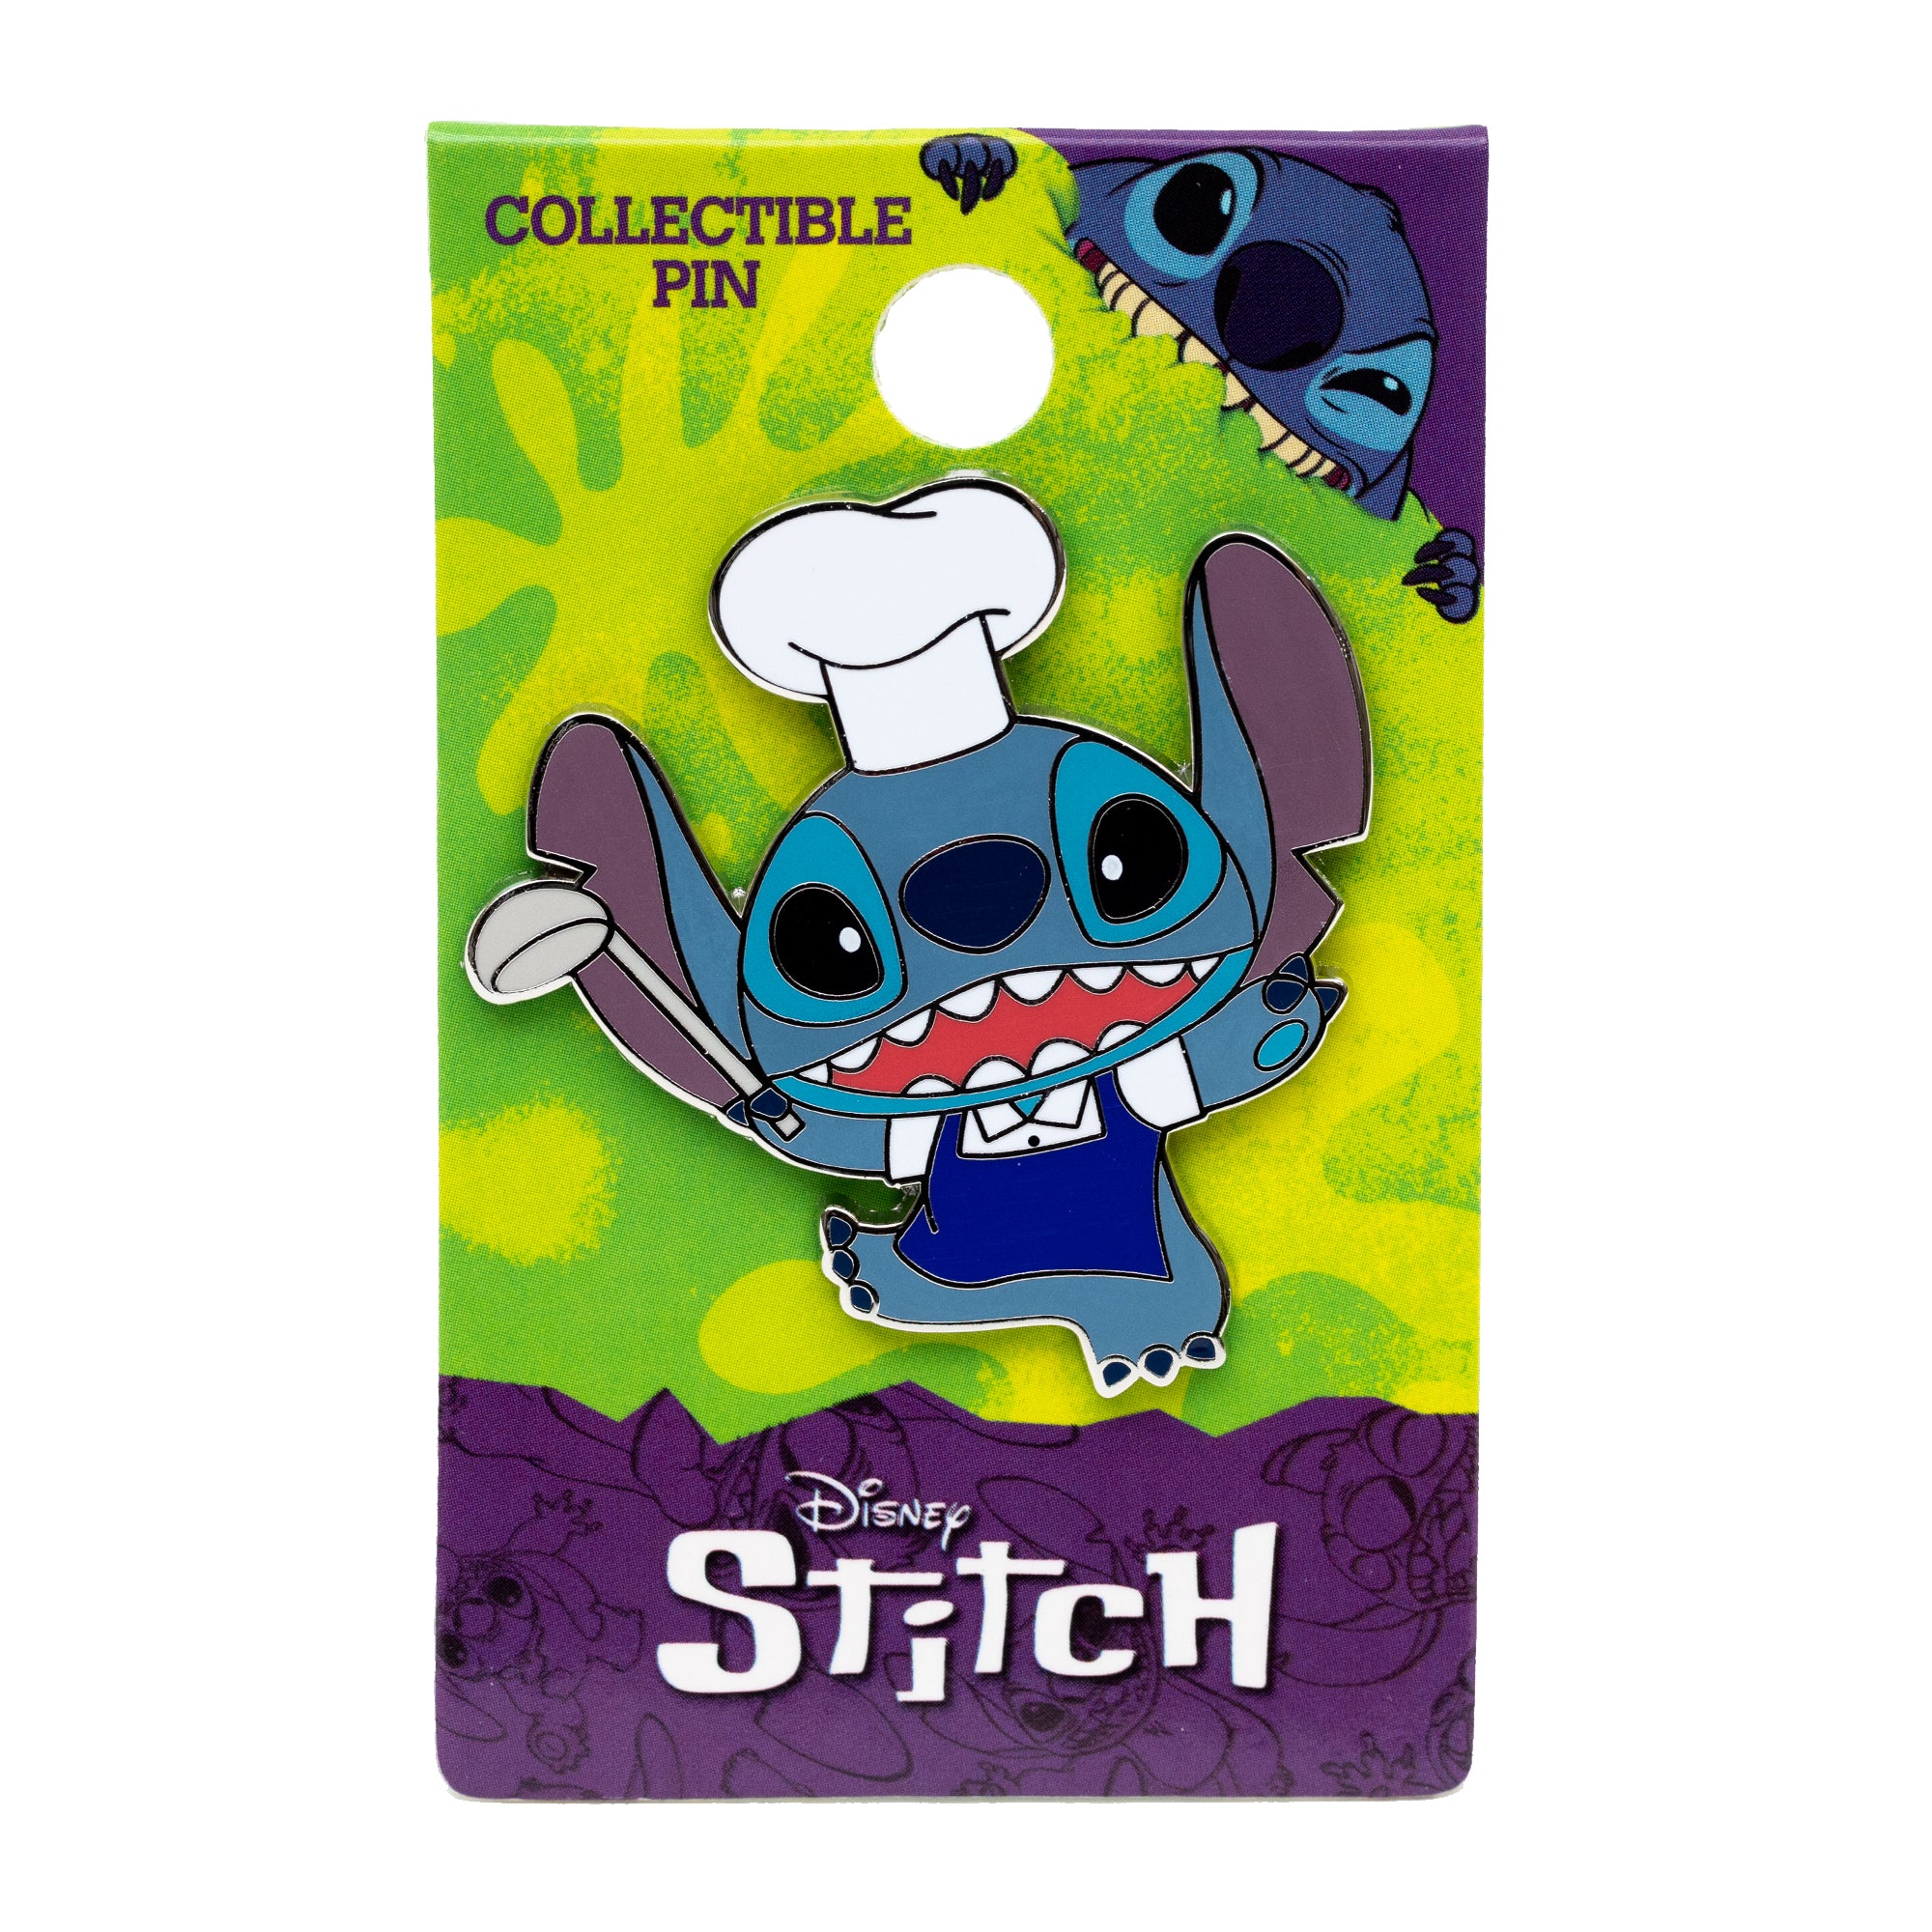 Pin on Lilo and Stitch